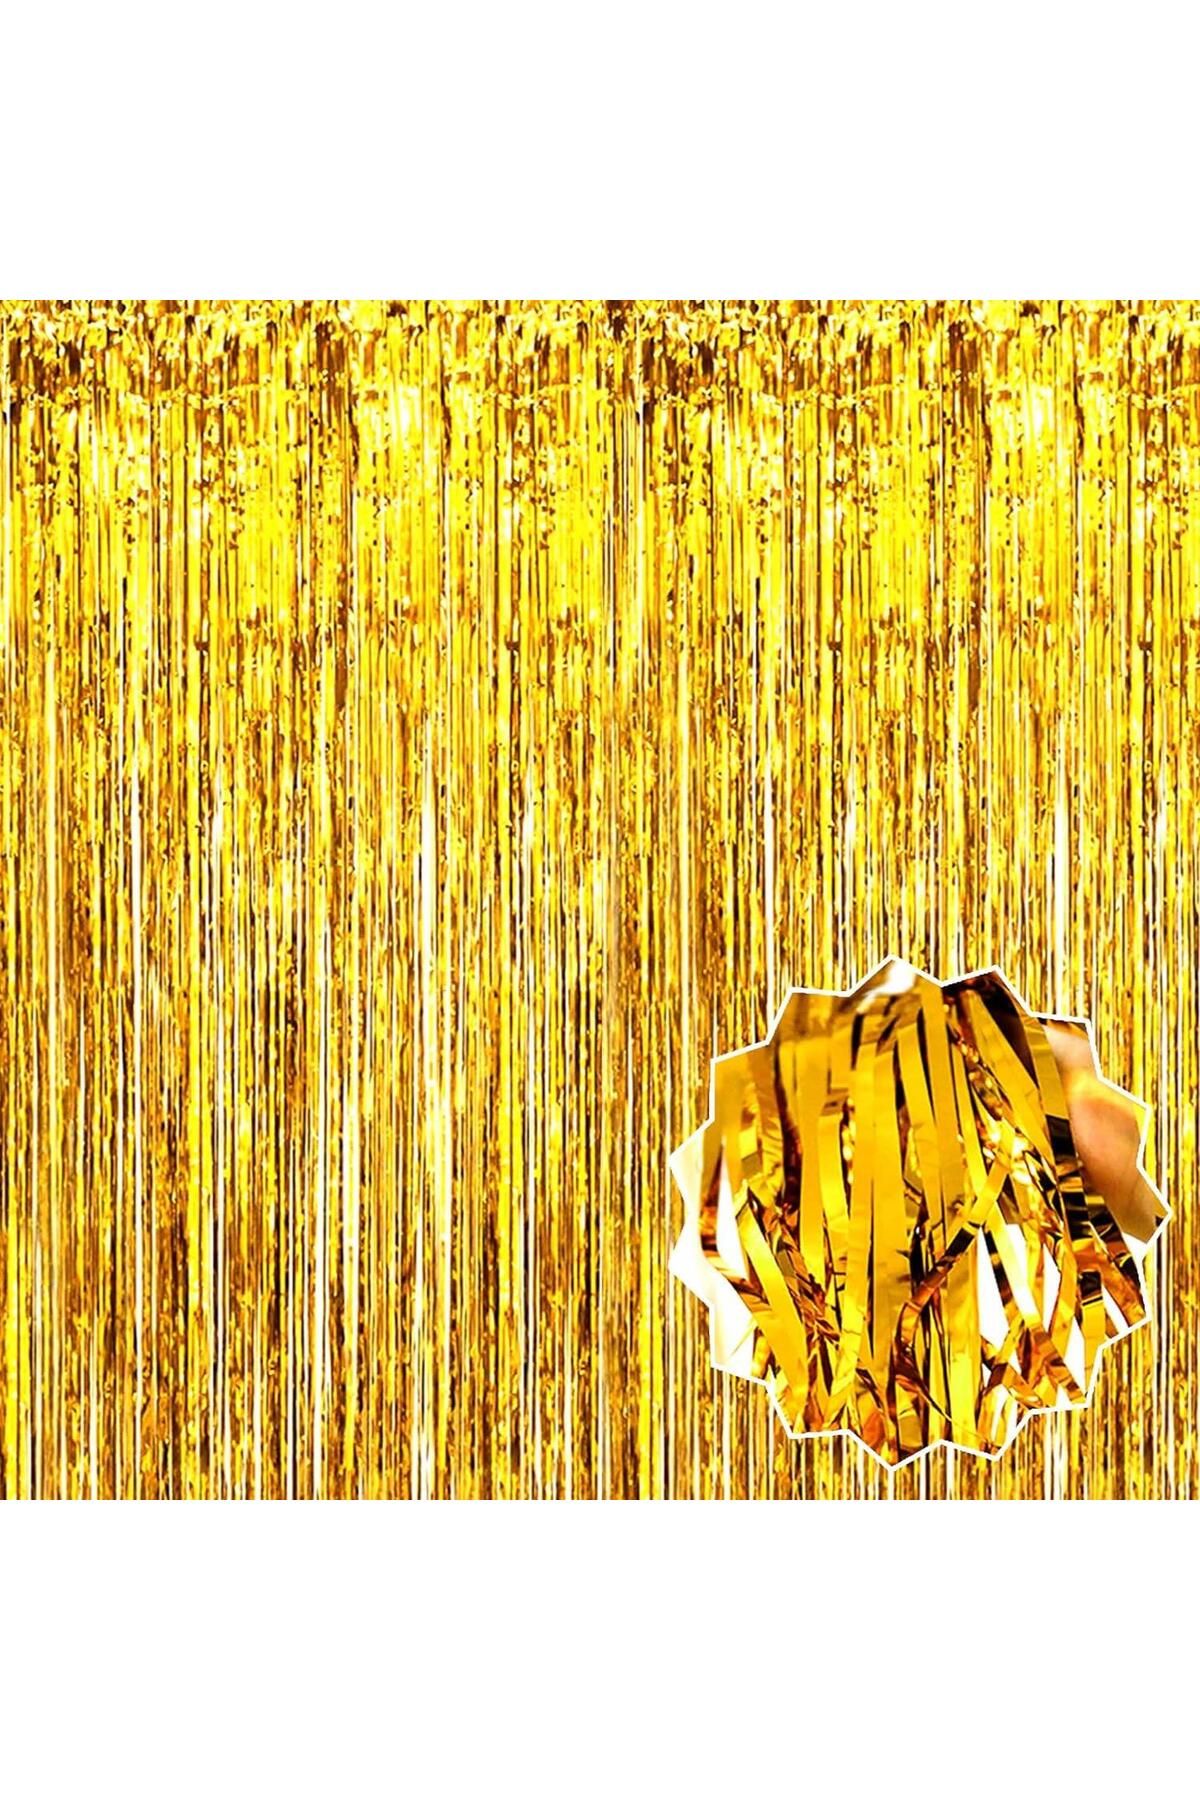 Skygo Altın Gold Renk Ekstra Metalize Parlak Saçaklı Arka Fon Perde İthal A Kalite 1x2 Metre